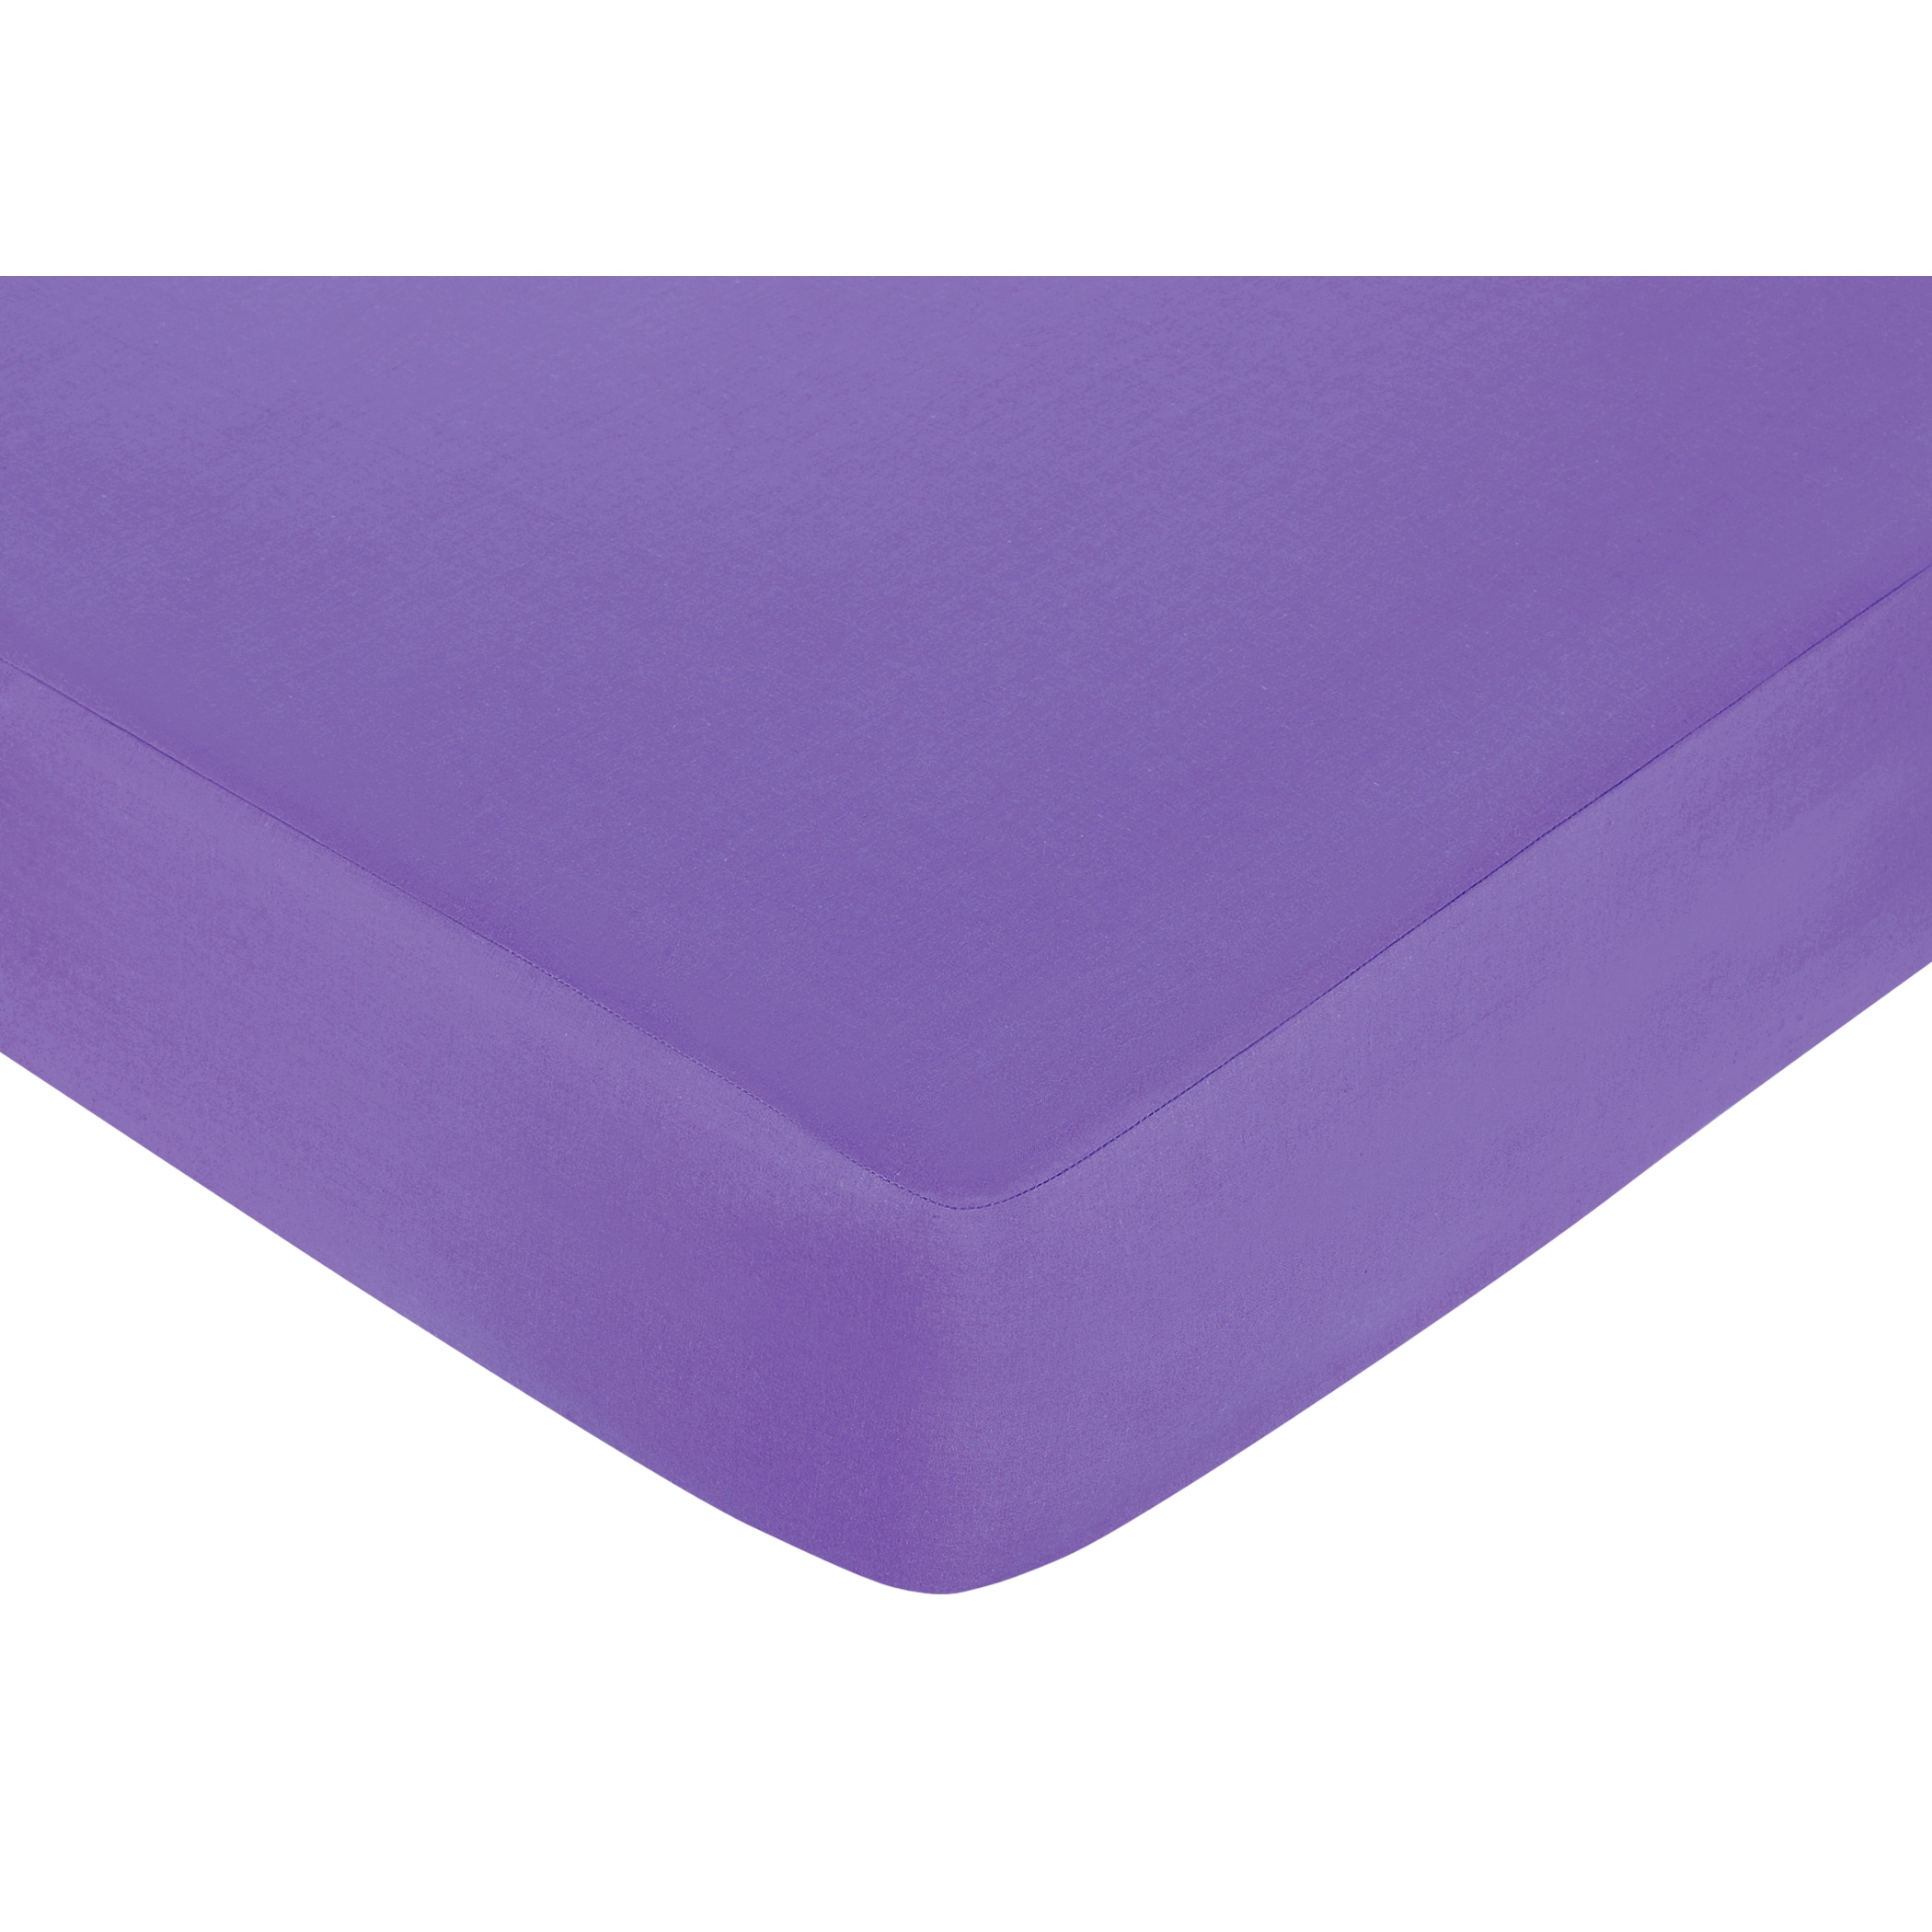 Sweet Jojo Designs Purple Fitted Crib Sheet